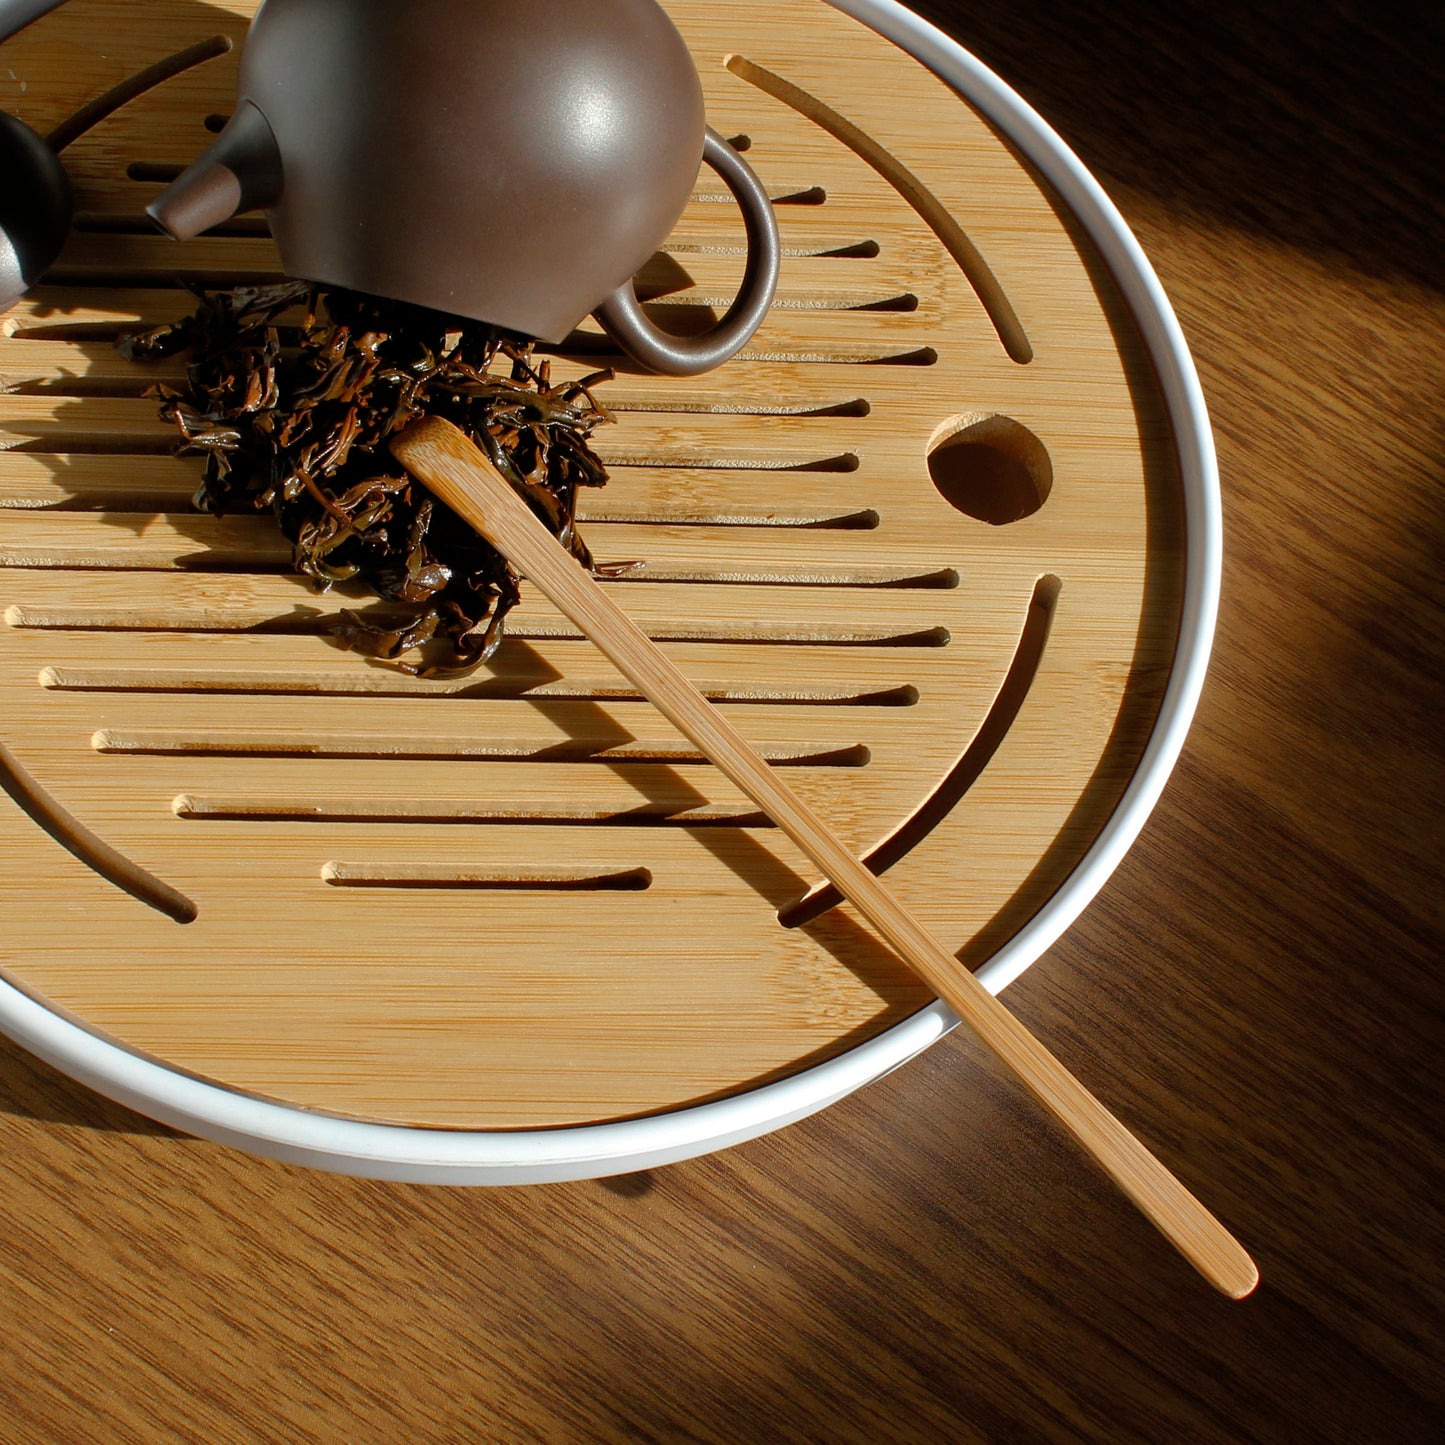 Bamboo Tea Rake - with teapot and wet leaves